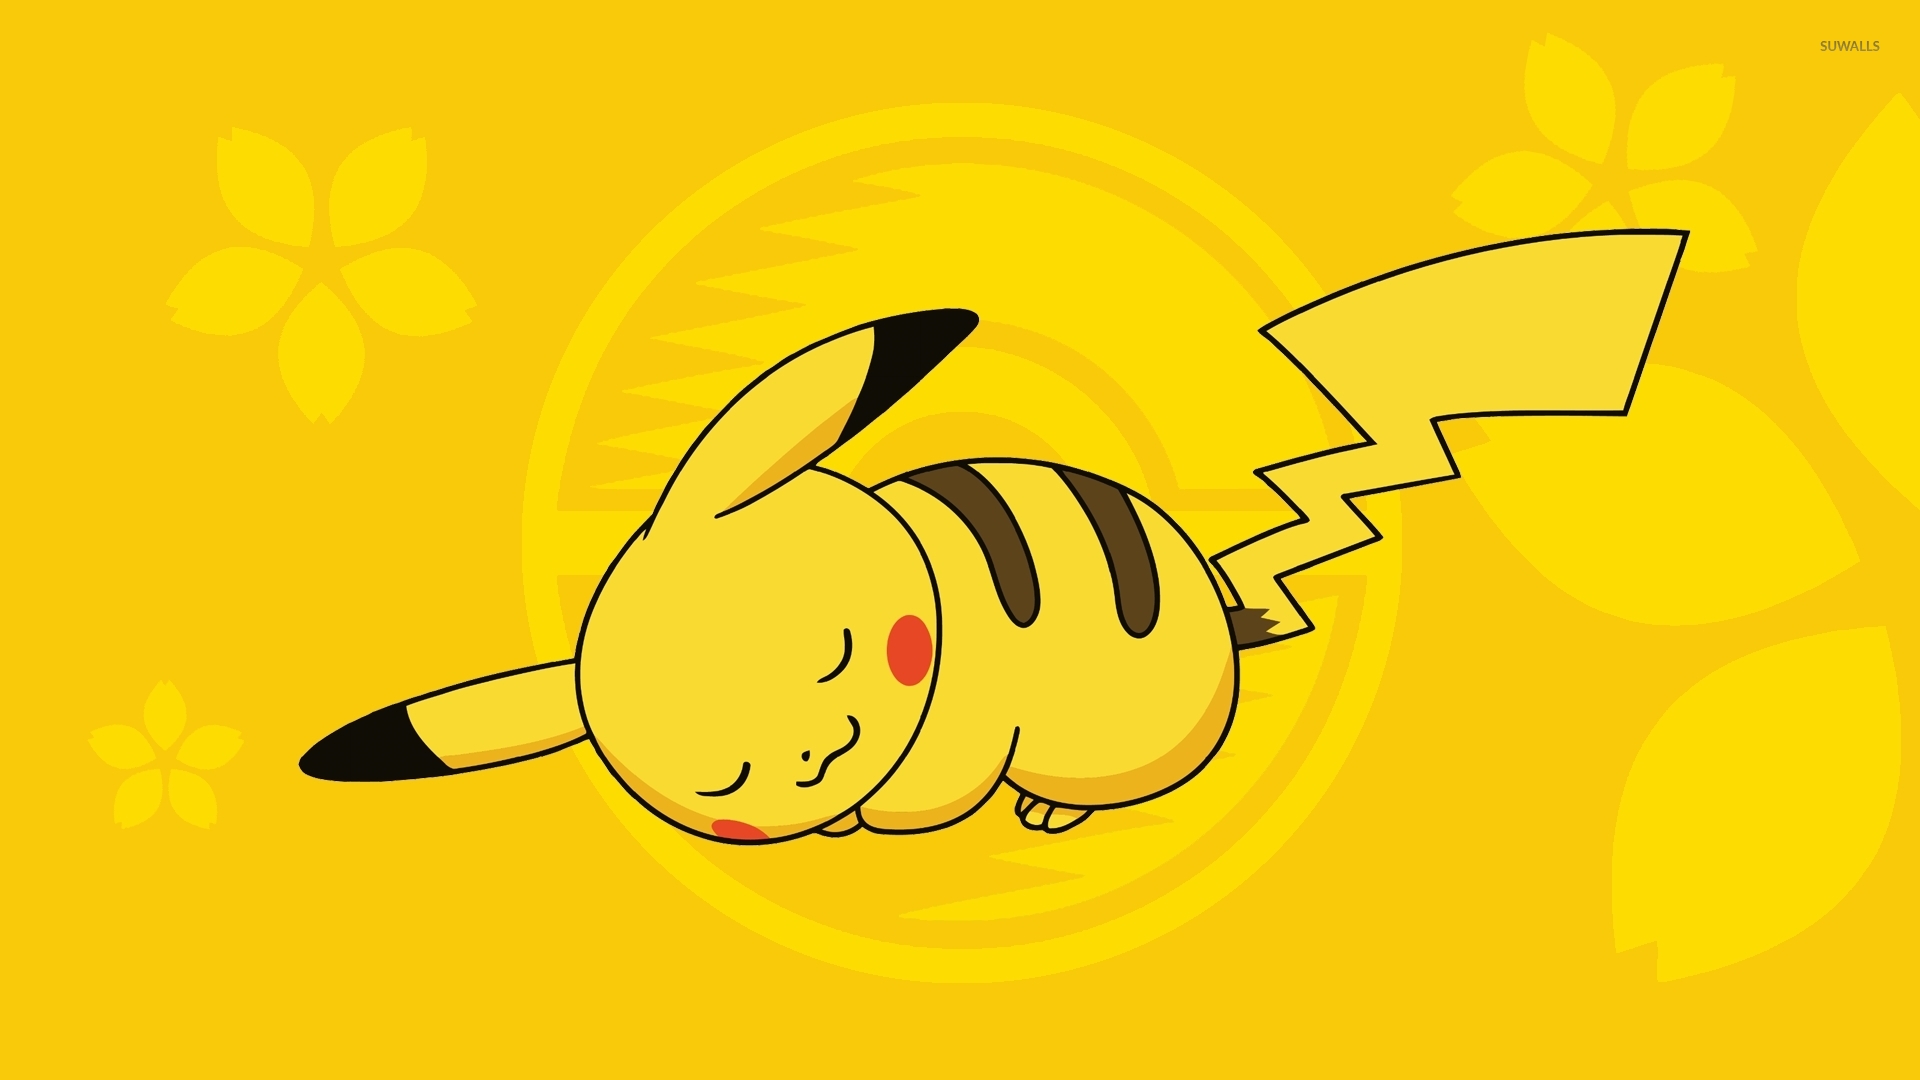 Sleeping Pikachu - Pokemon wallpaper